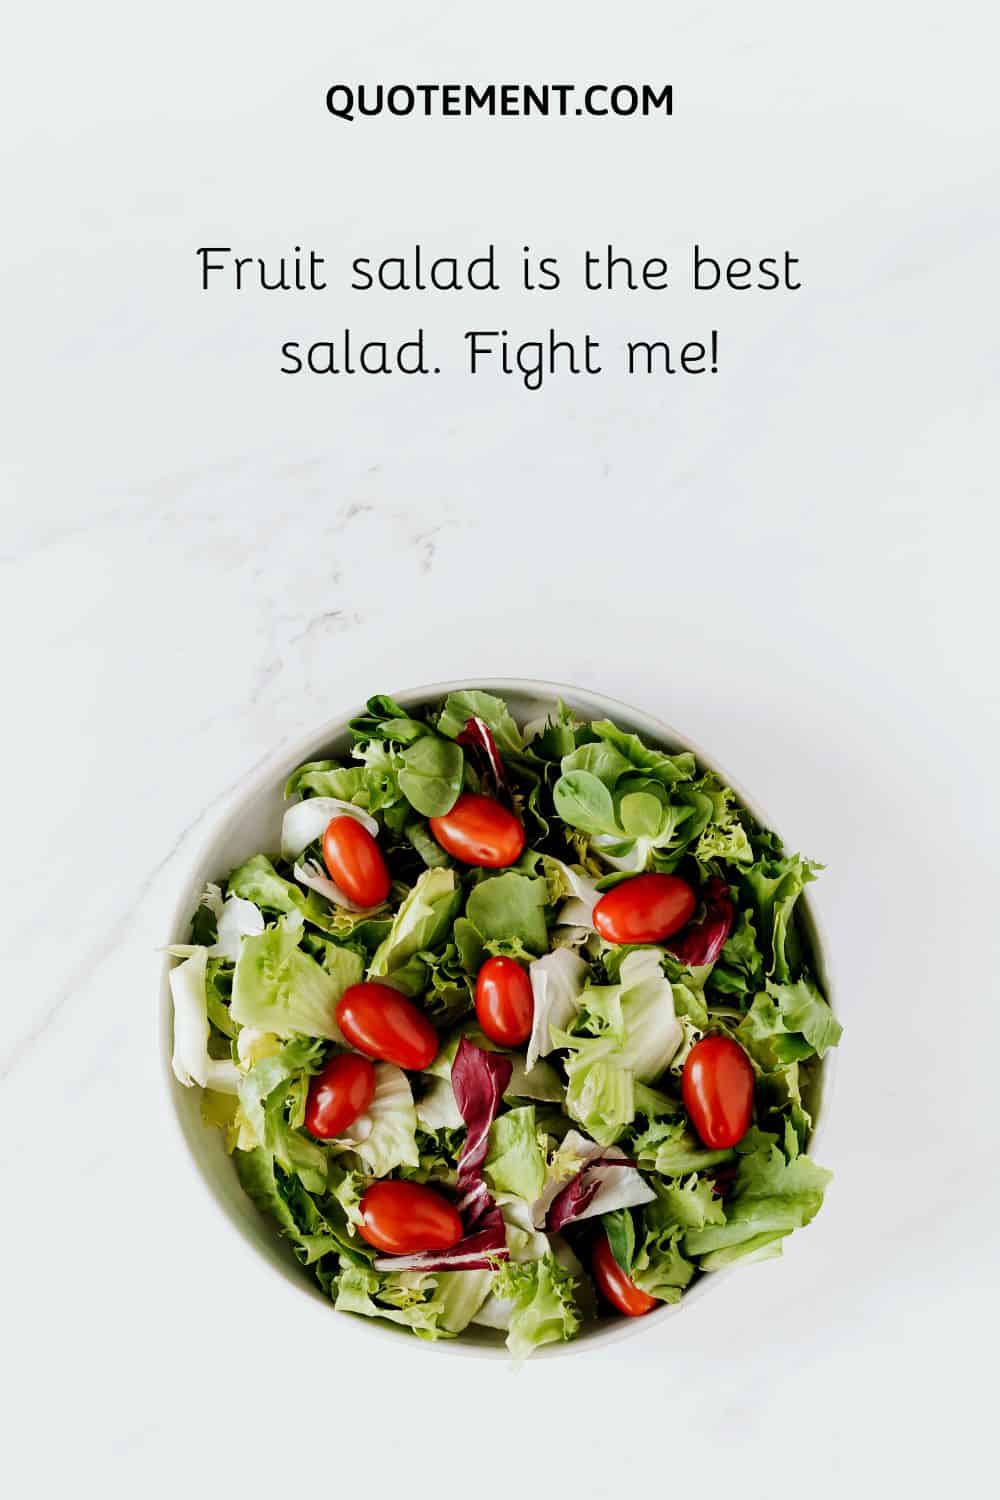 Fruit salad is the best salad